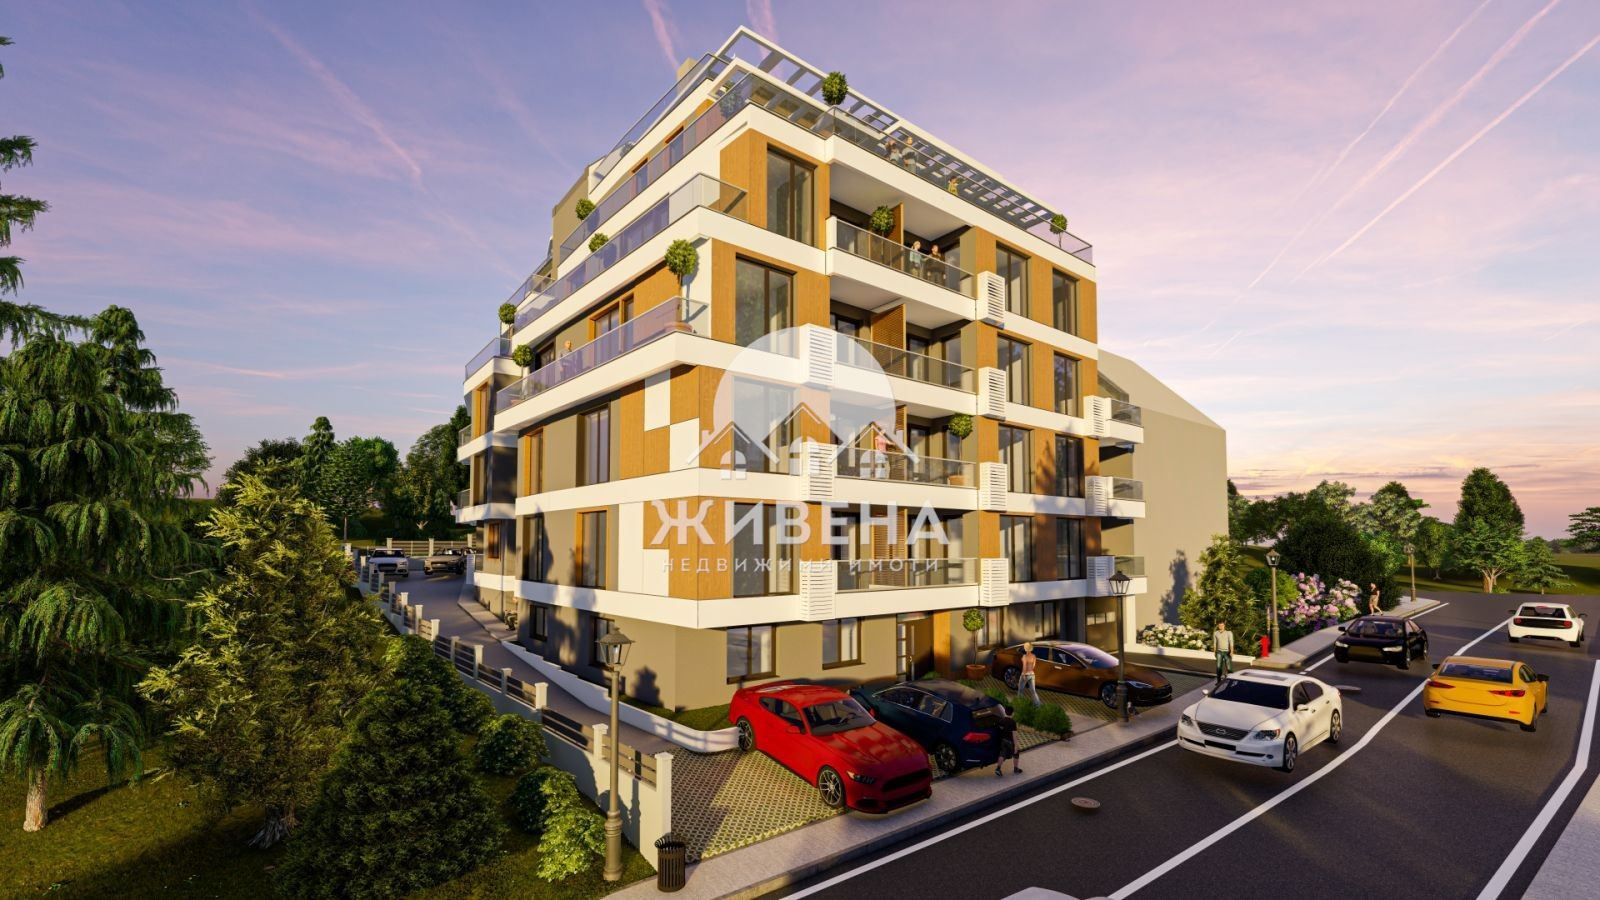 3-стаен апартамент, нова сграда в строеж, в м-т Сотира, площ 96 кв.м